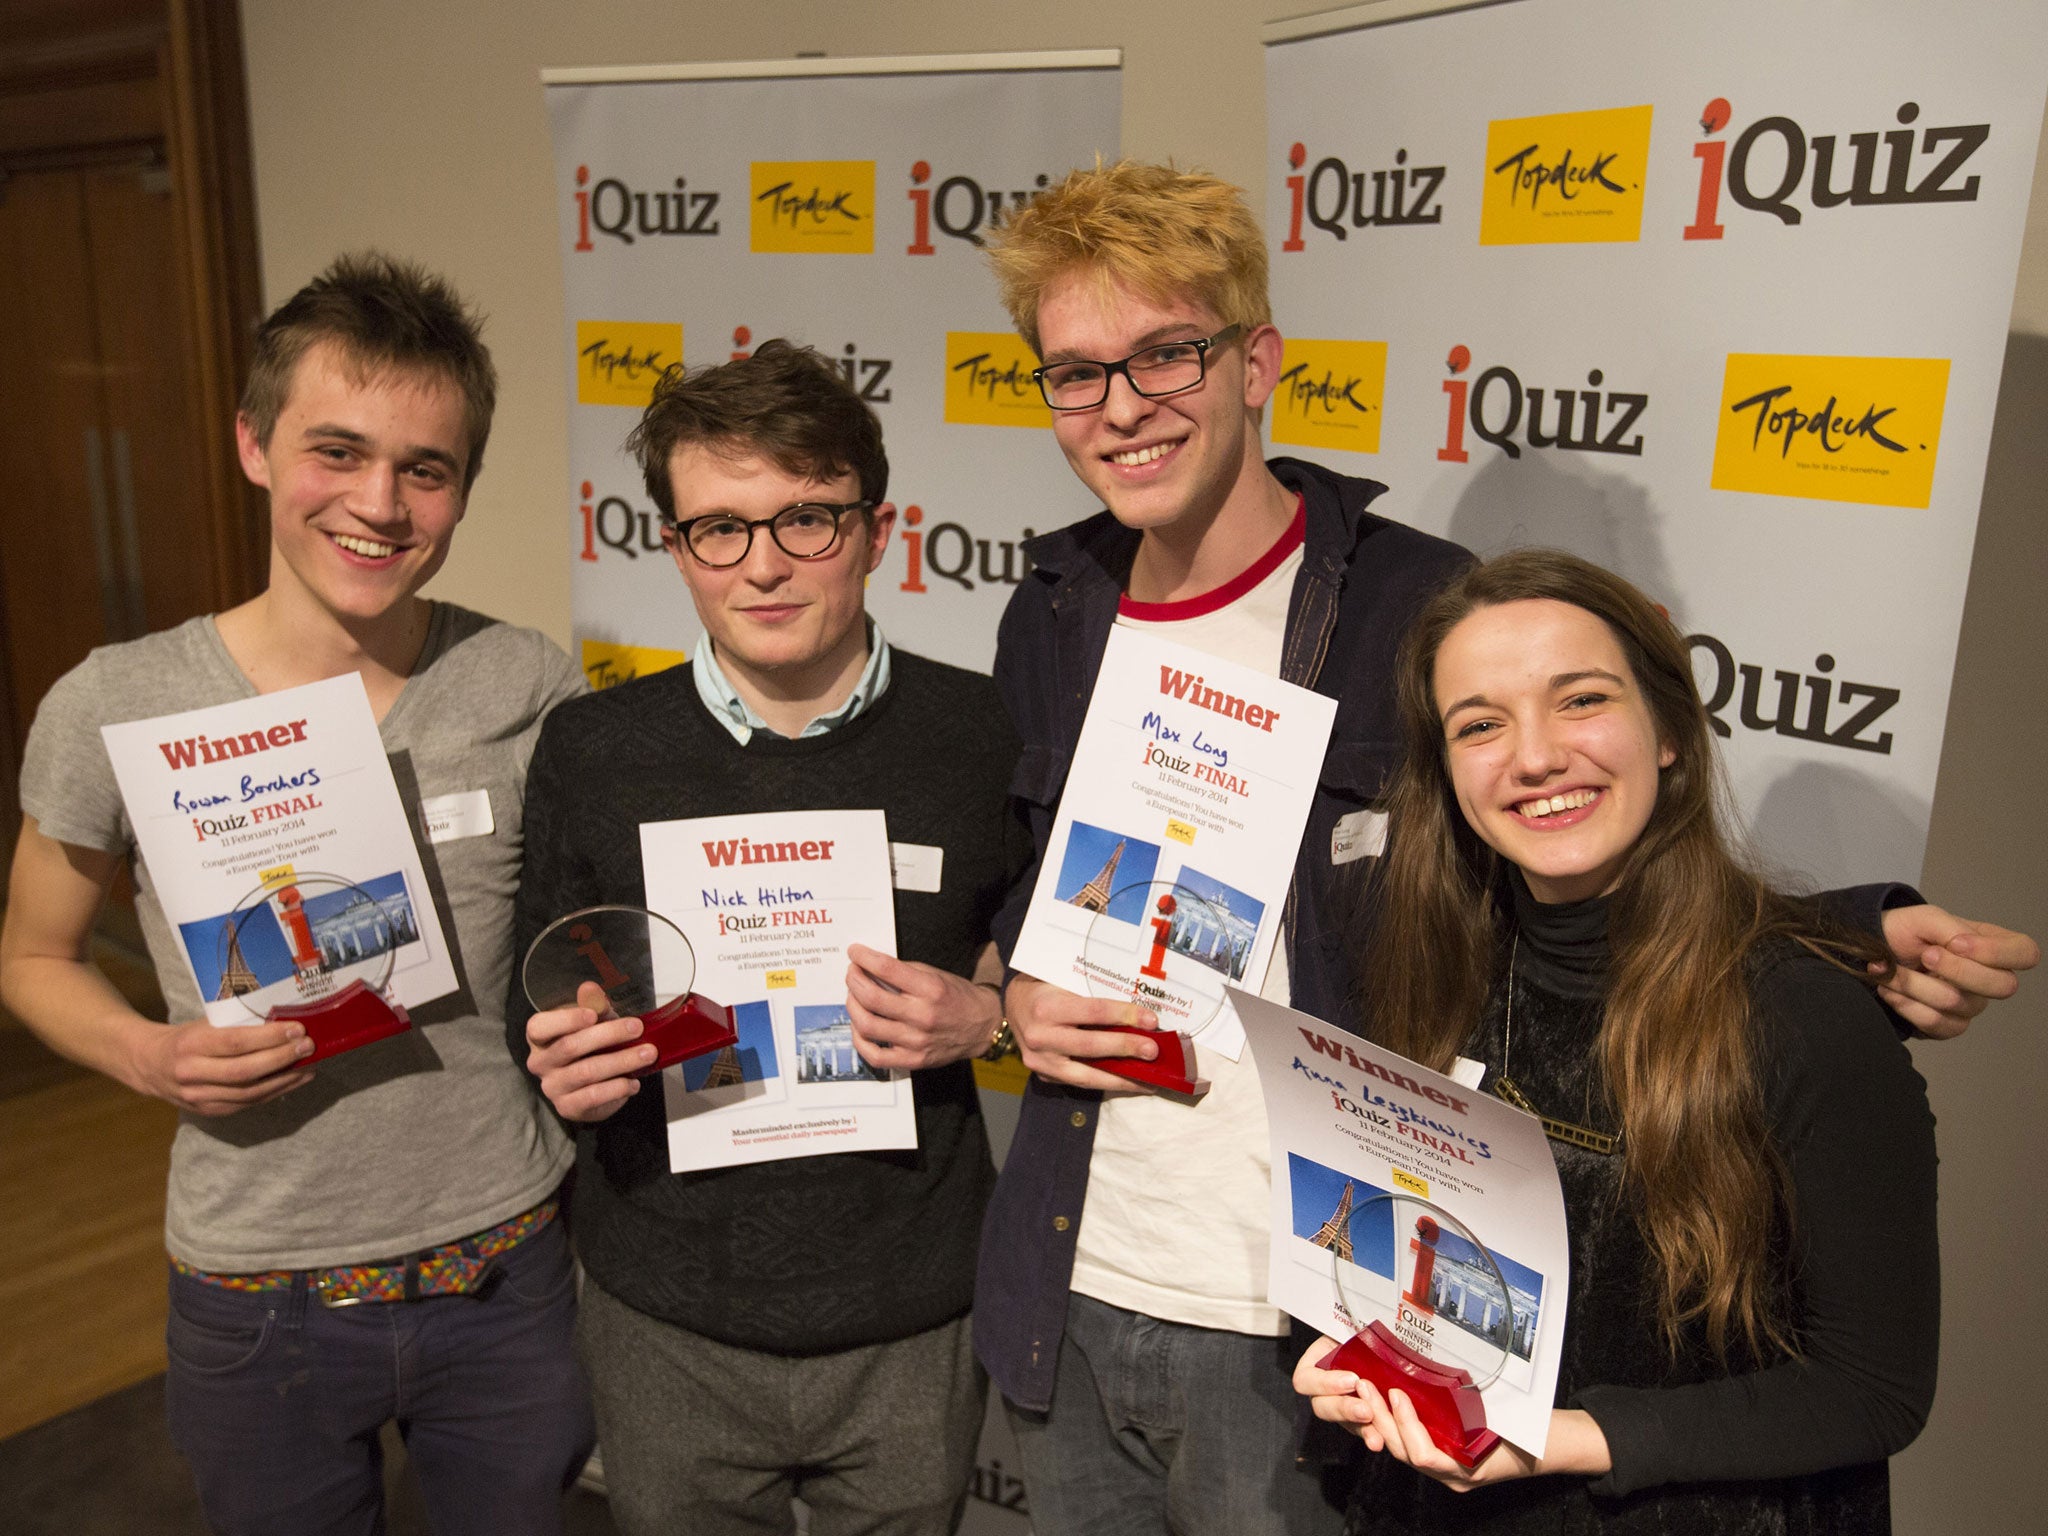 University of Oxford's team "Cherwell A". From left: Rowan Borchers; Nick Hilton; Max Long; Anna Leszkiewicz